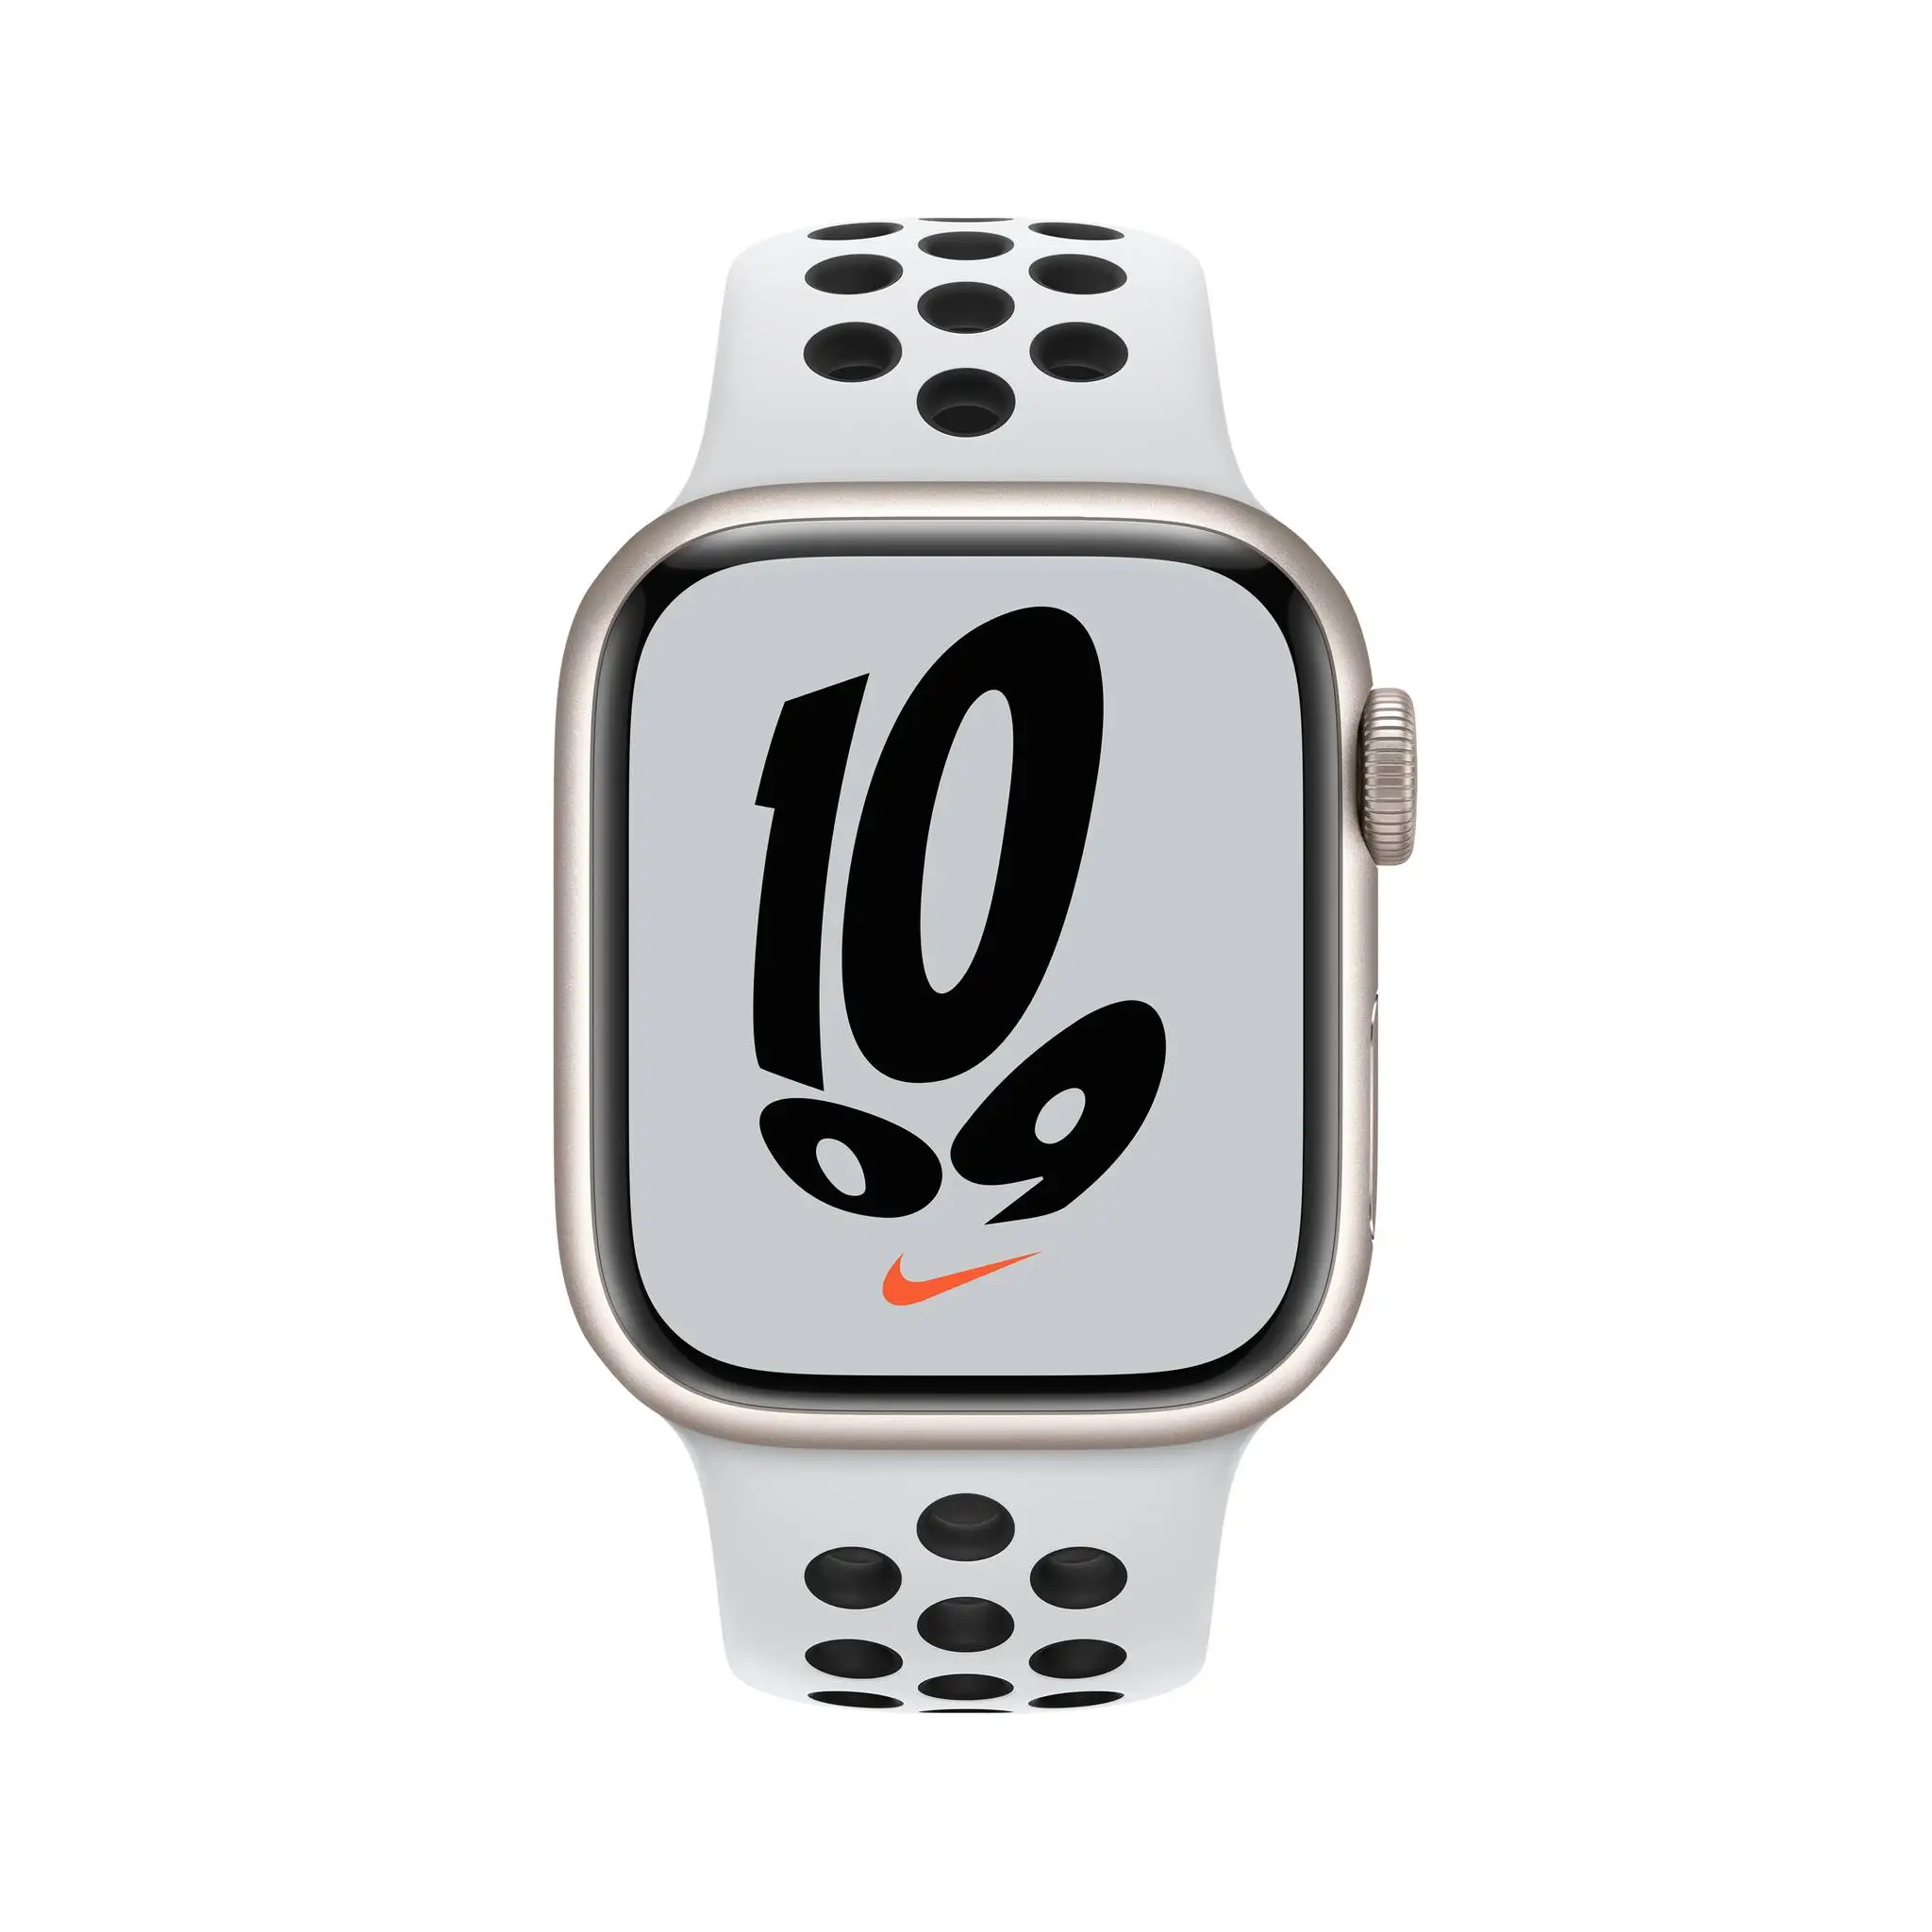 Cría radio llegada Apple Watch Series 7 Nike VS Apple Watch Series 7: Which One is Better?